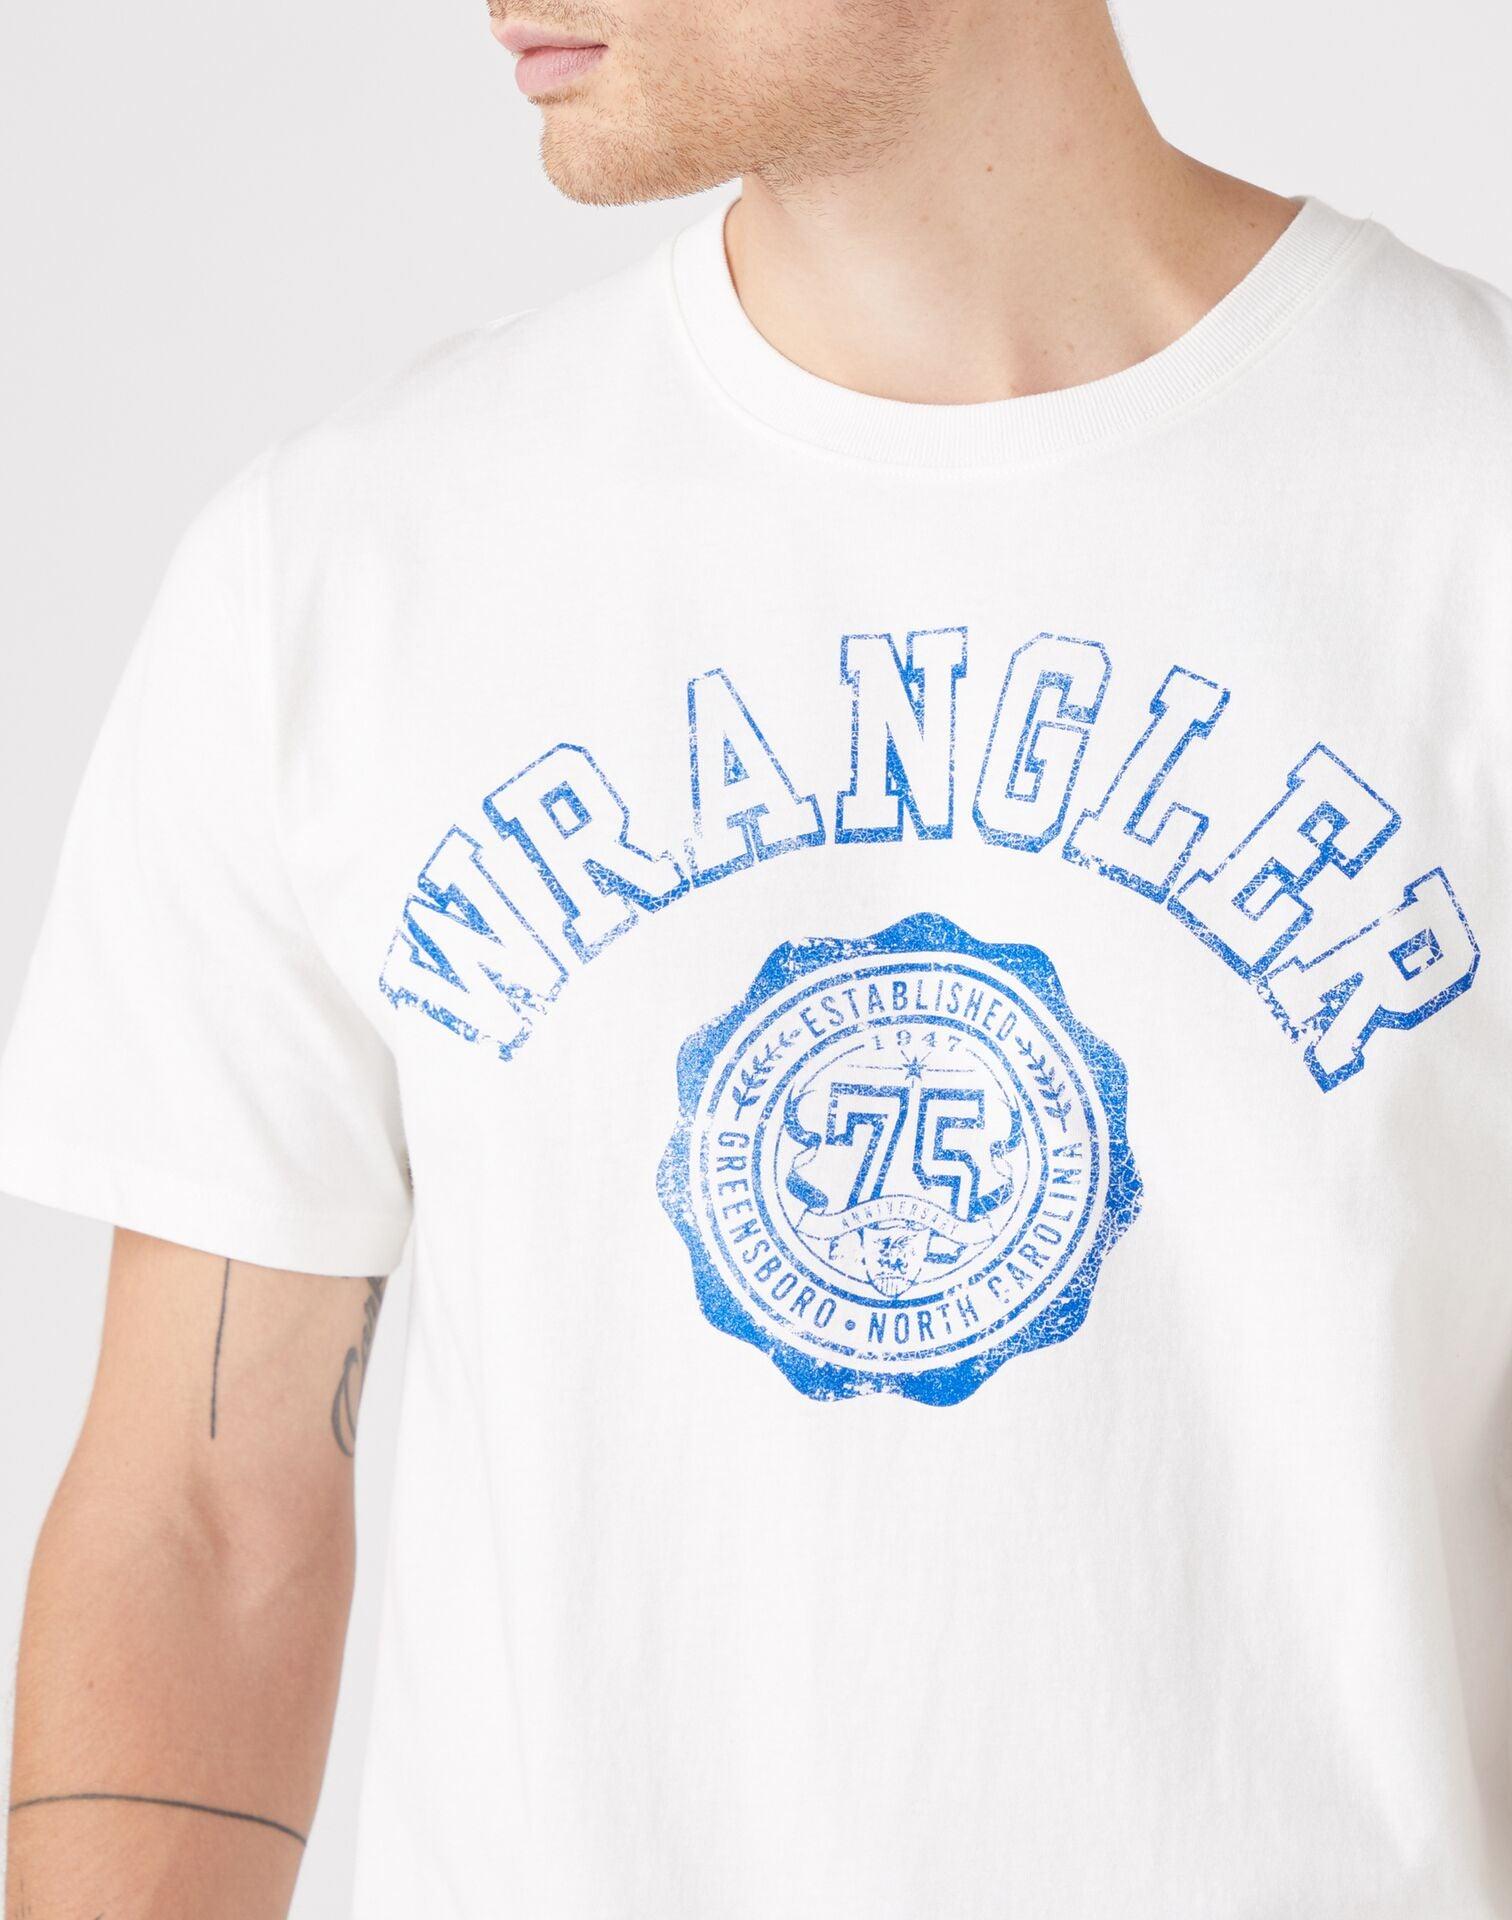 WRANGLER - חולצת טי COLLEGIATE בצבע אוף וויט - MASHBIR//365